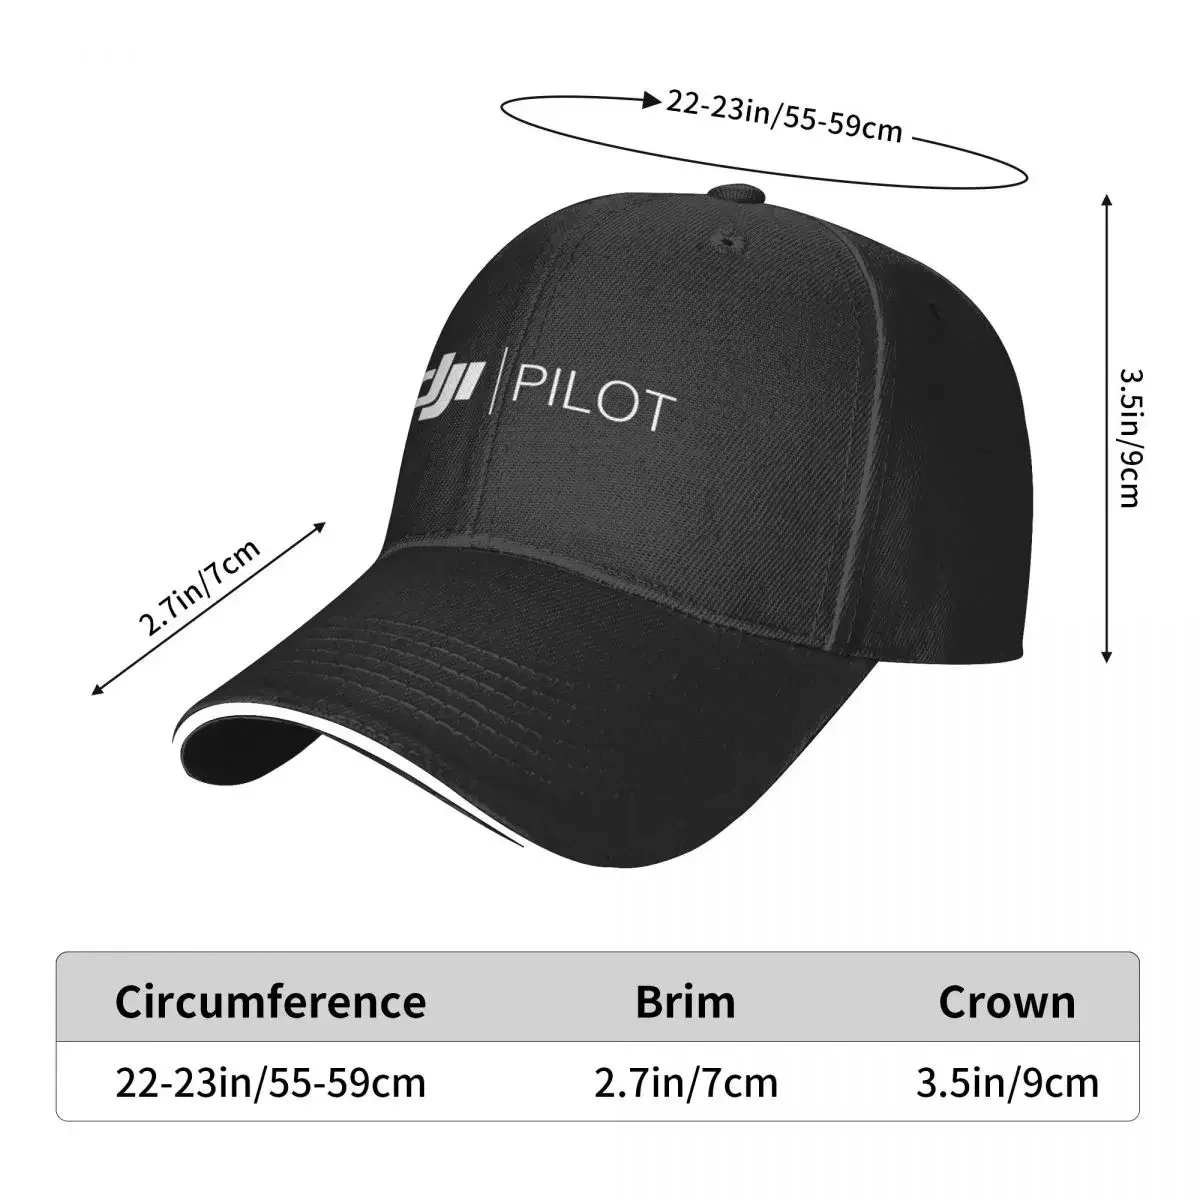 Best Seller - DJI Pilot Merchandise Cap baseball cap Fishing caps Hat for girls Men's images - 6